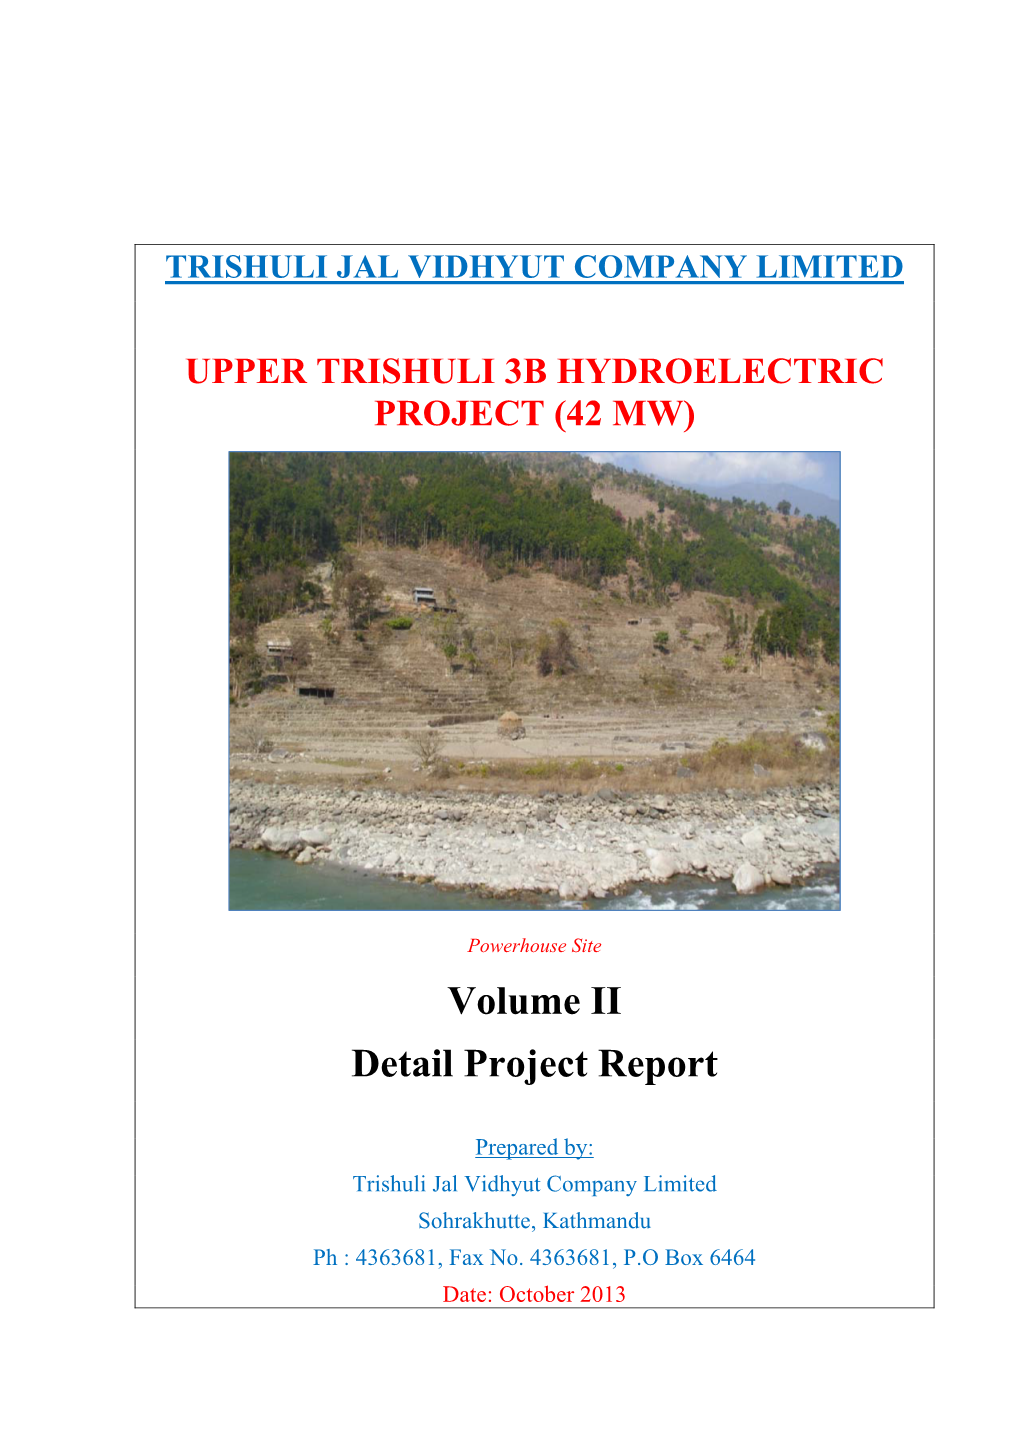 Volume II Detail Project Report